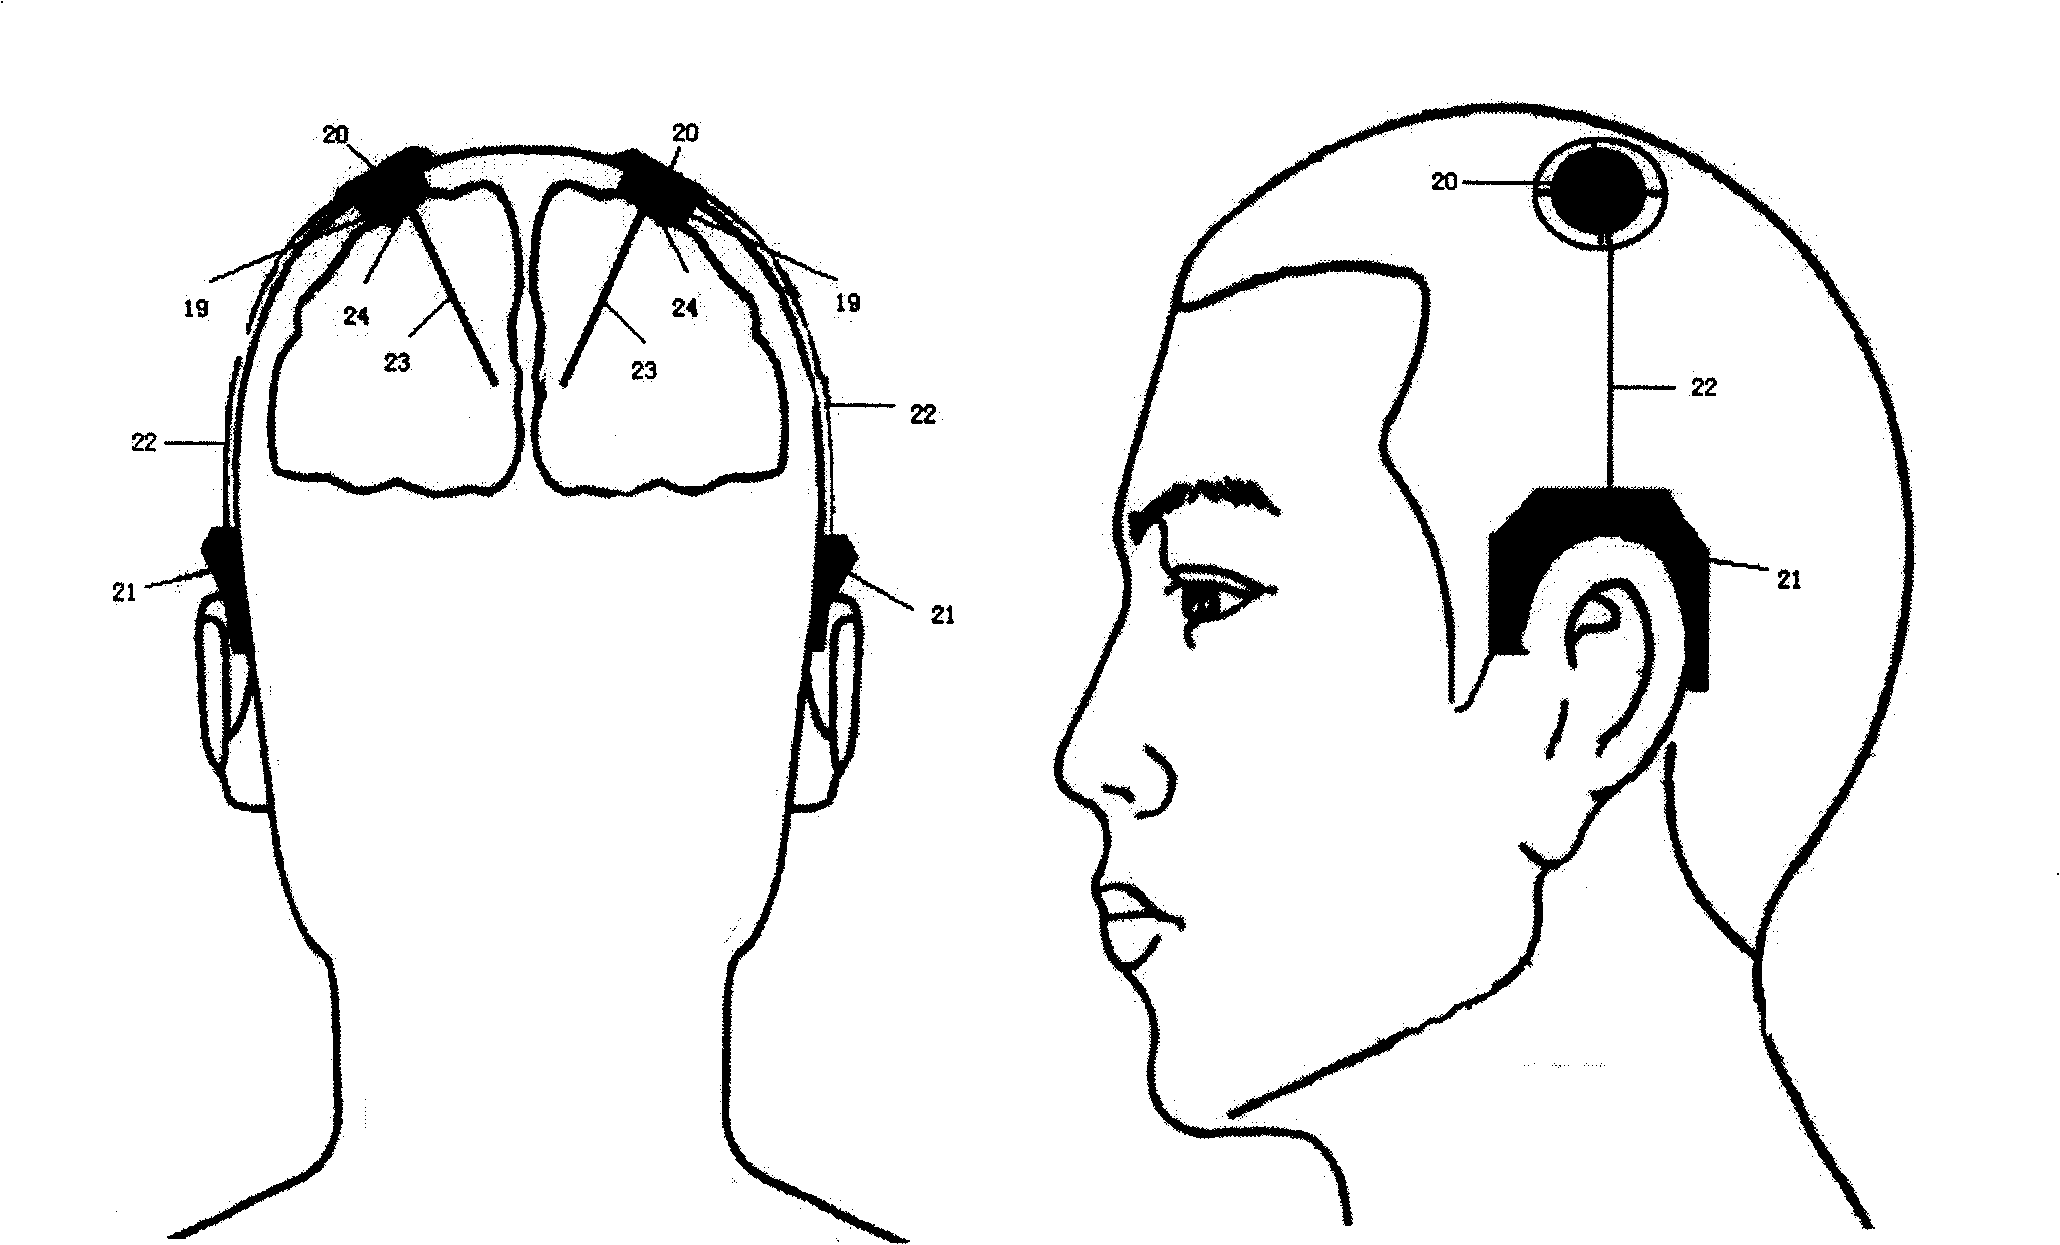 Intelligent cranial nuclei electric stimulation system